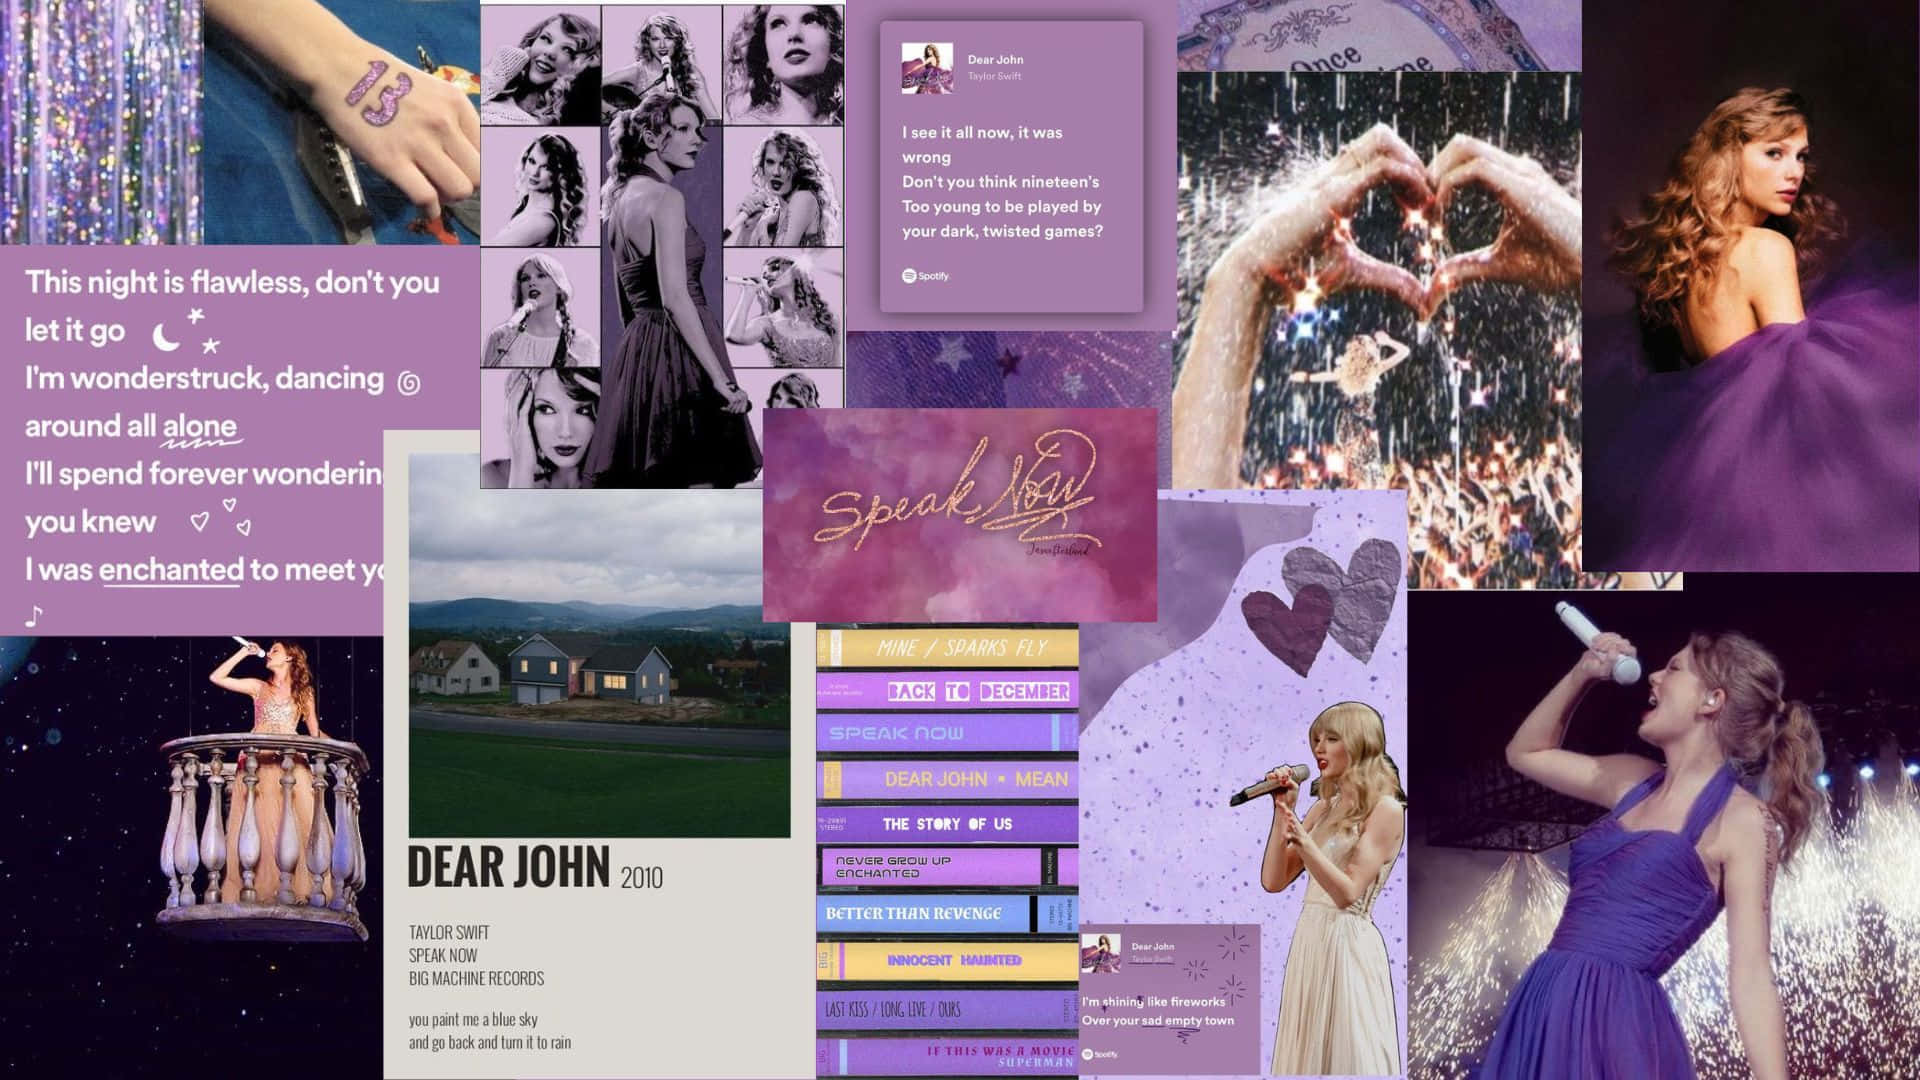 Speak Now Taylor Swift Collage Wallpaper